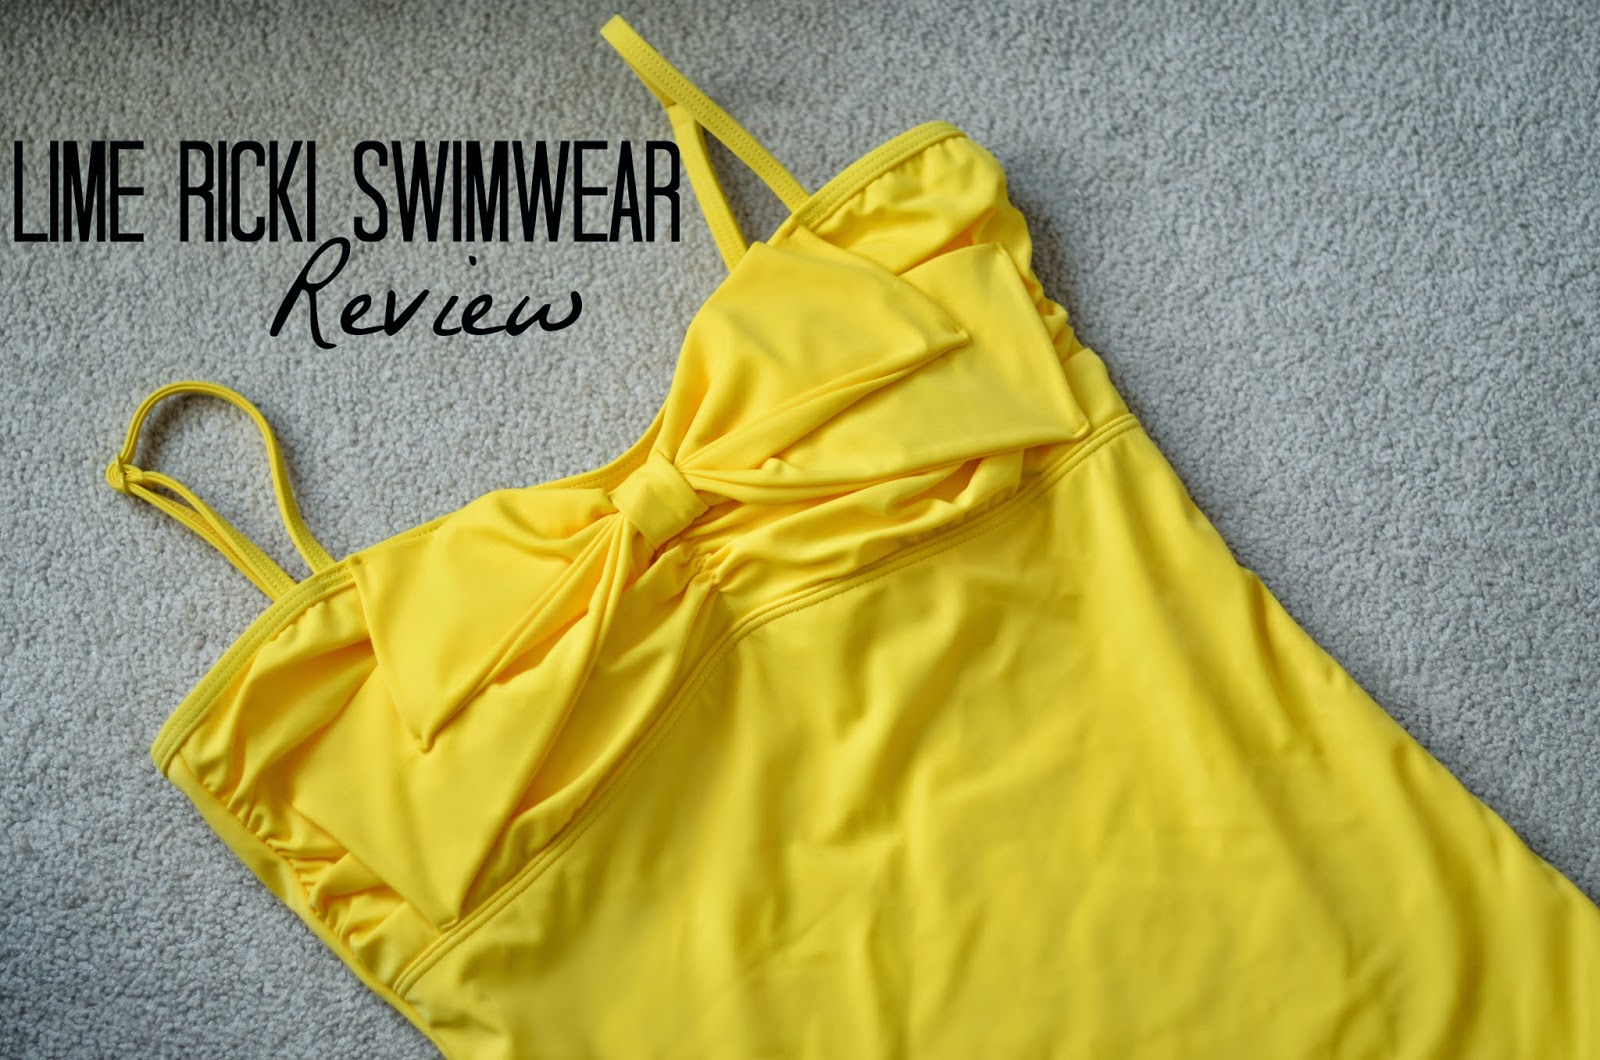 Bramblewood Fashion  Modest Fashion & Beauty Blog: Lime Ricki Swimsuit  Line [Review]